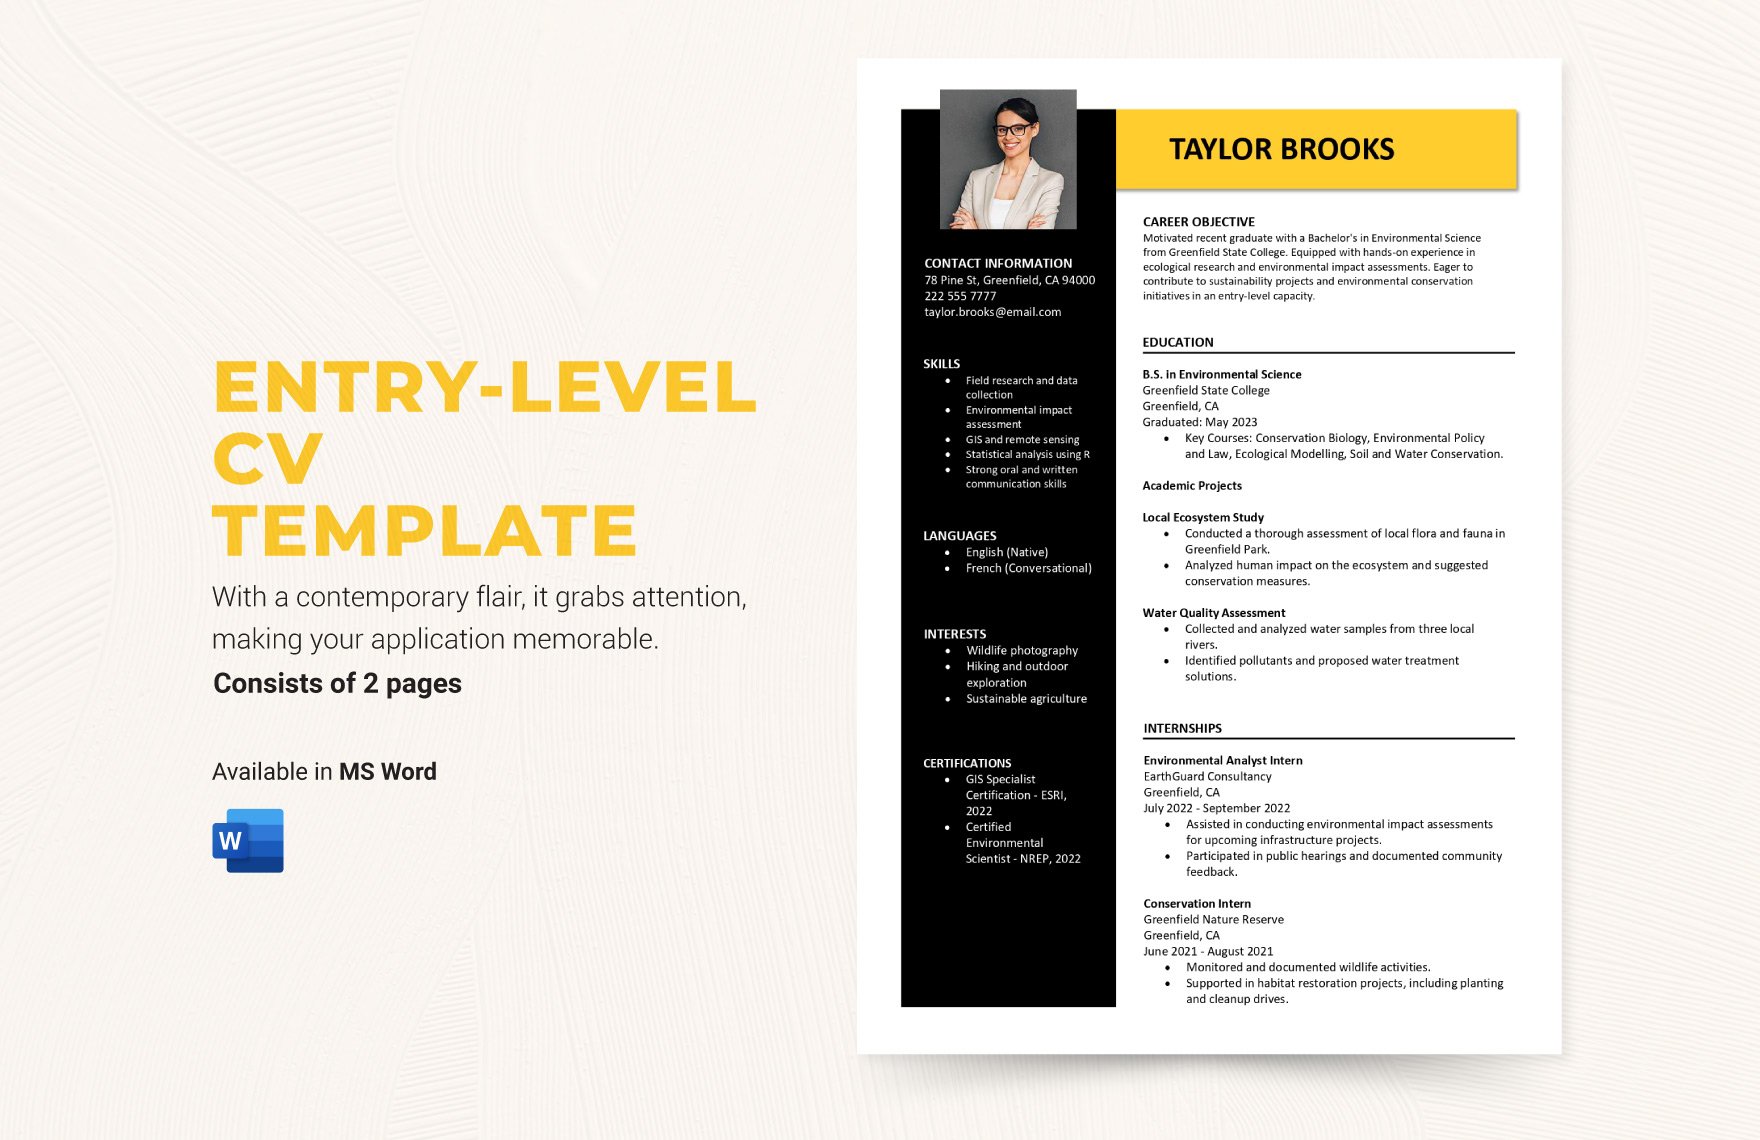 Entry-Level CV Template